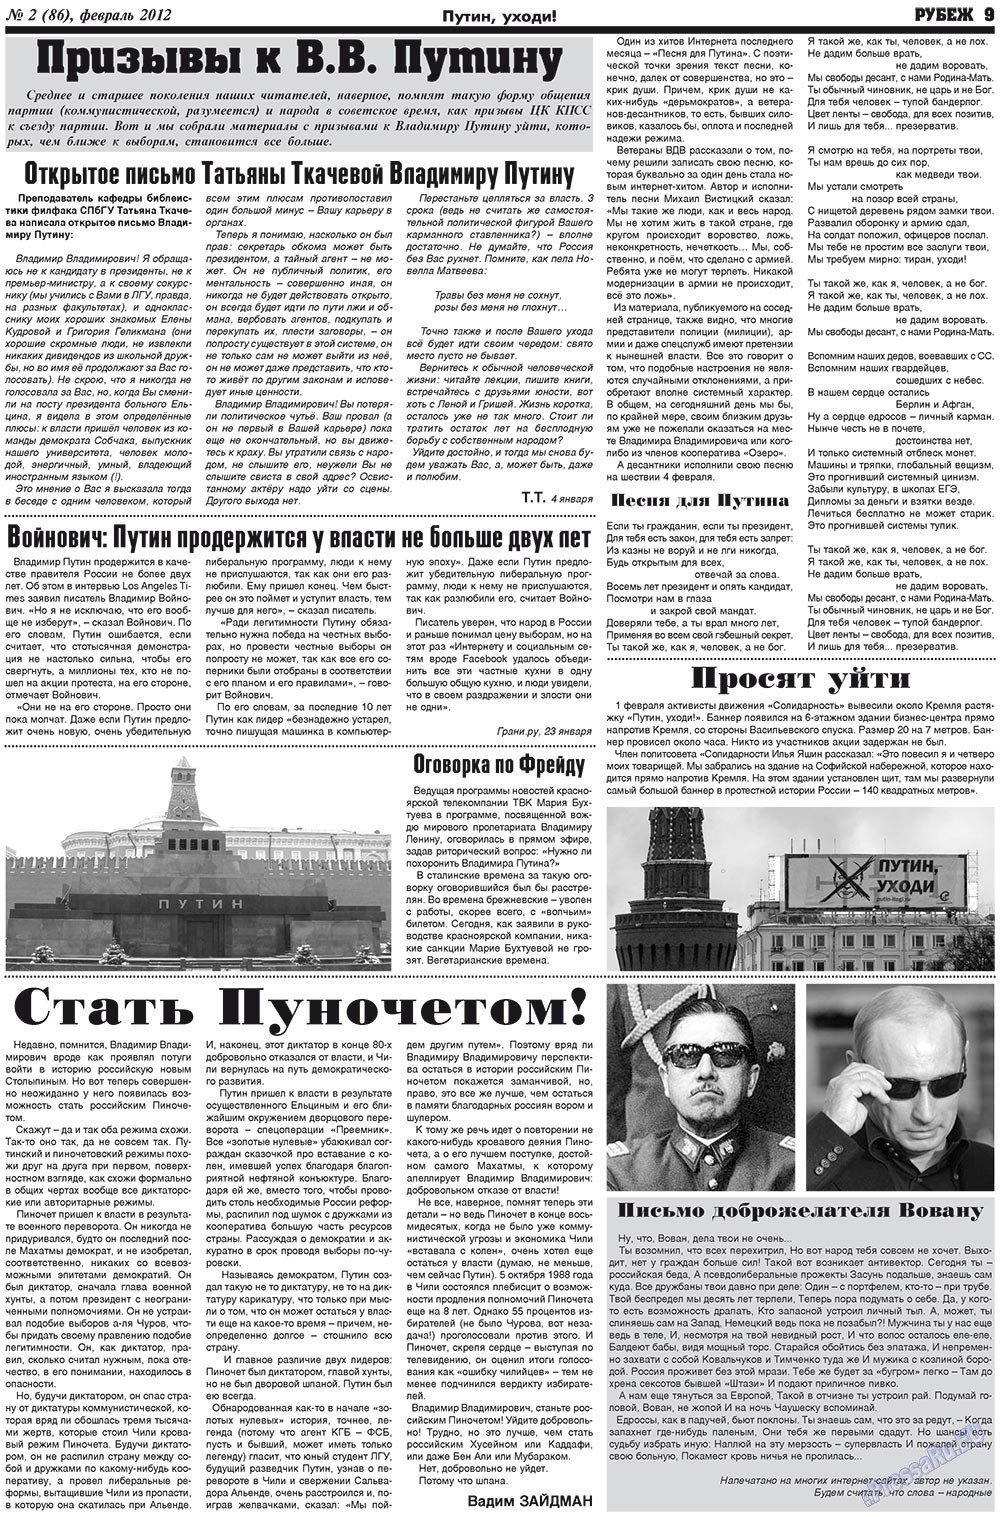 Рубеж, газета. 2012 №2 стр.9